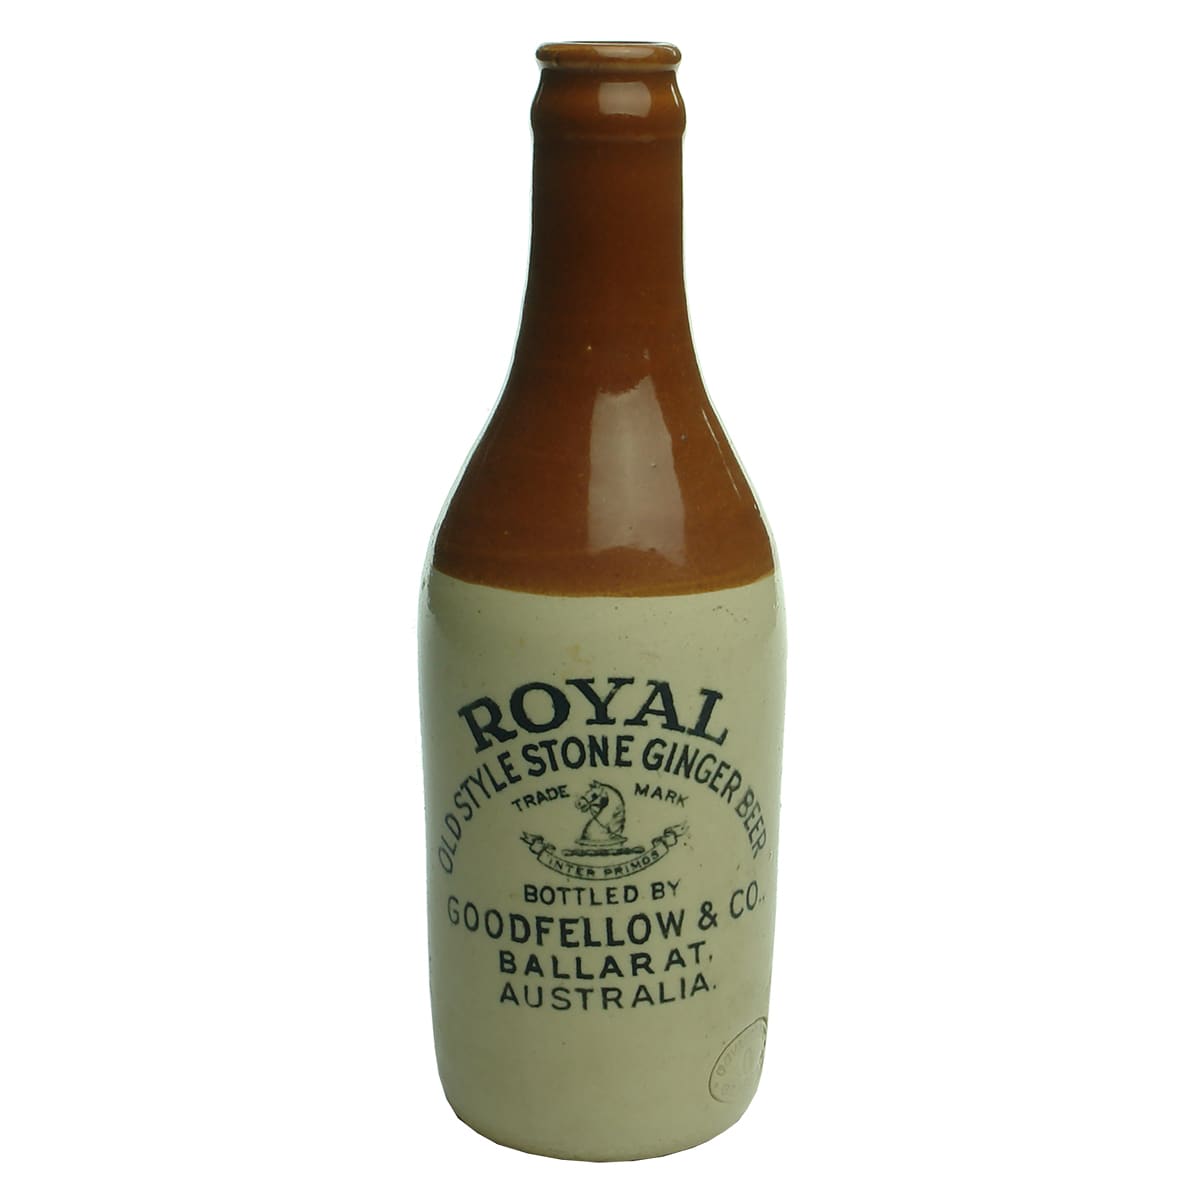 Ginger Beer. Goodfellow, Ballarat. Royal. Crown Seal. Chocolate Top. 10 oz.